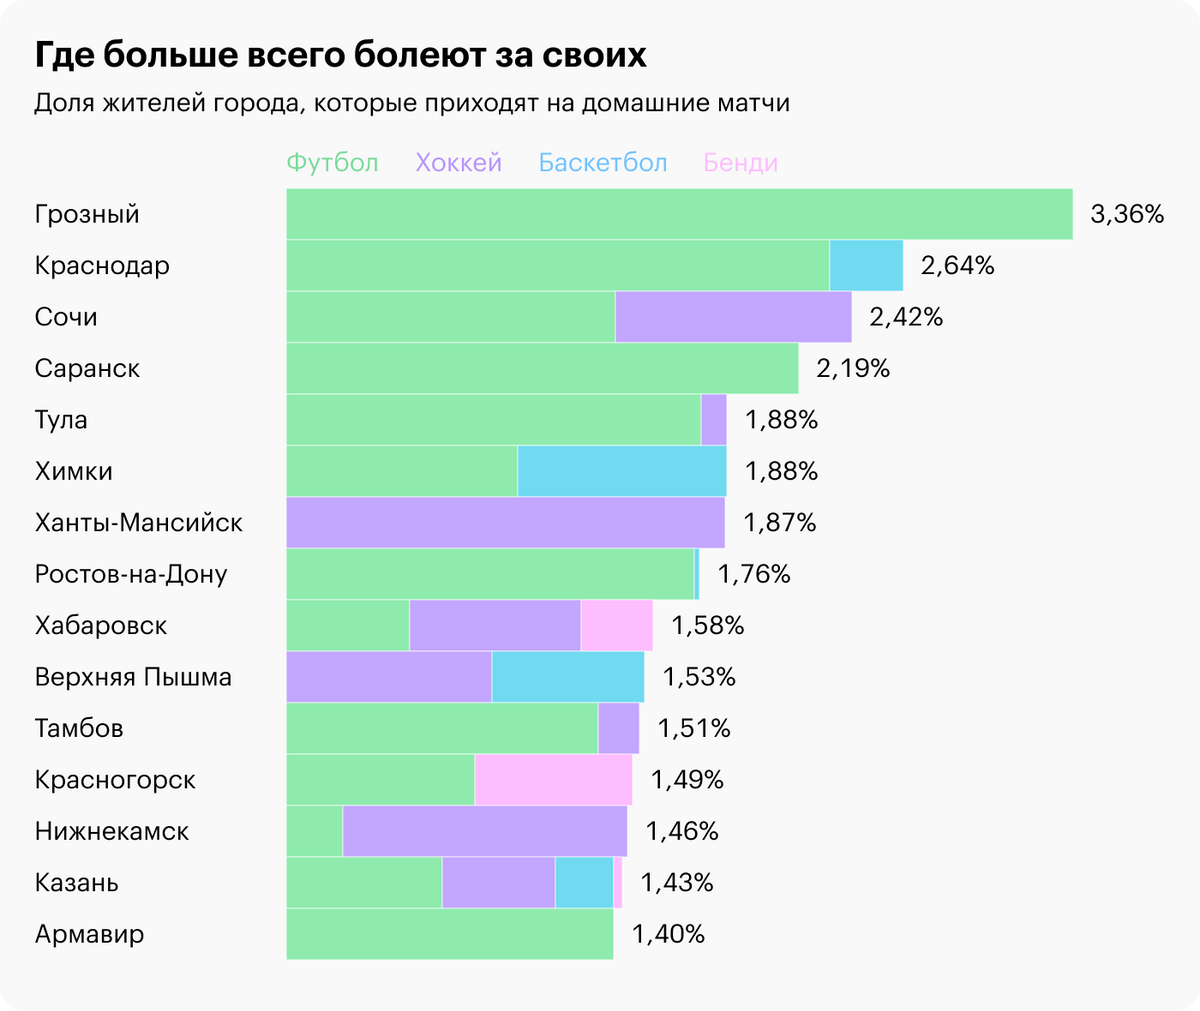 Источники: rusbandy.ru, sports.ru, vhlru.ru, vtb-league.com